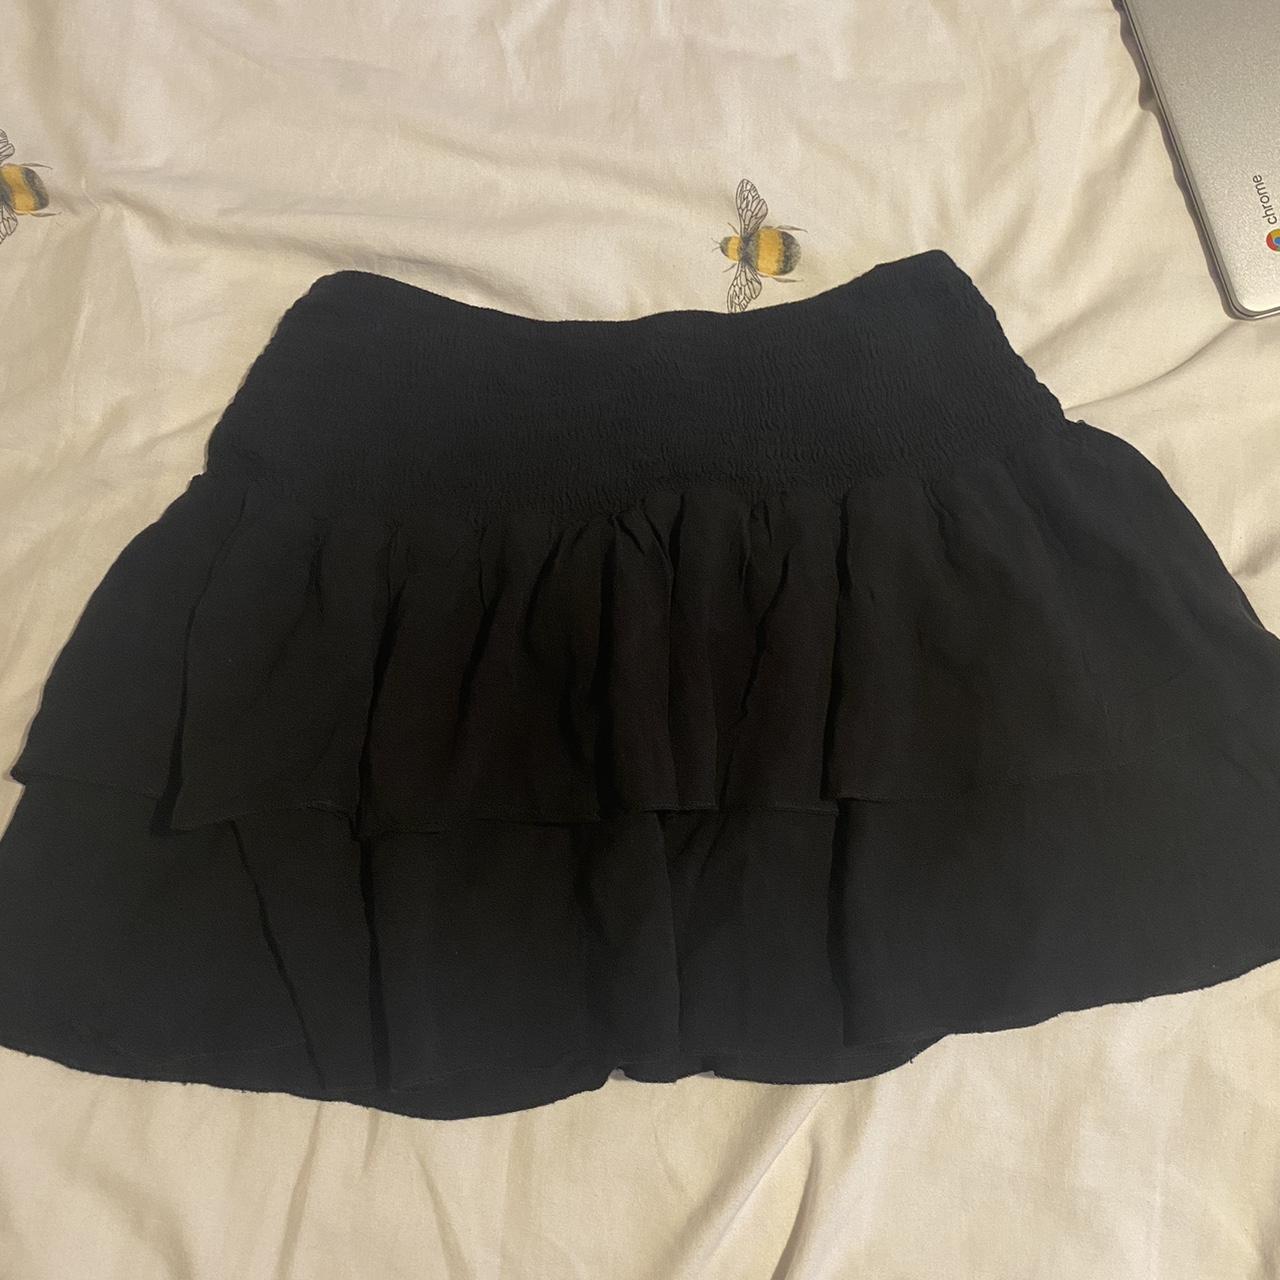 SHEIN Women's Black Skirt | Depop